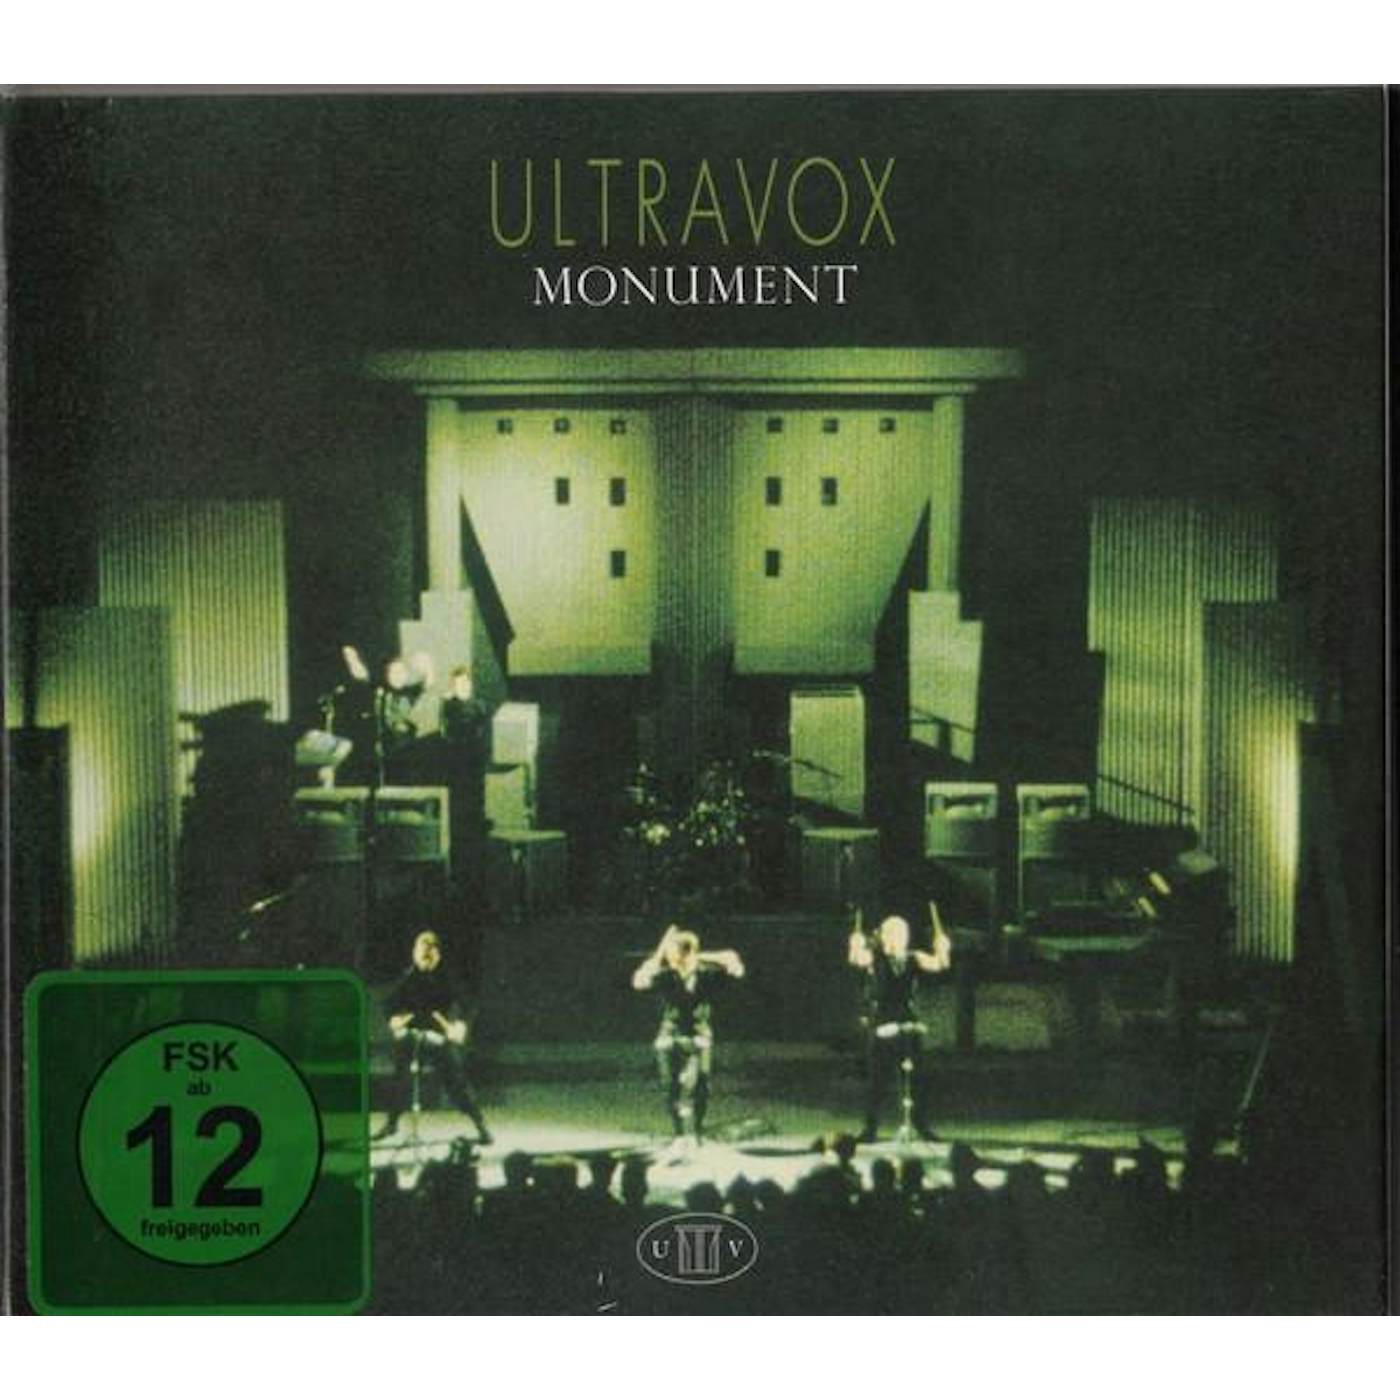 Ultravox MONUMENT (2009 DIGITAL REMASTER CD+DVD) CD